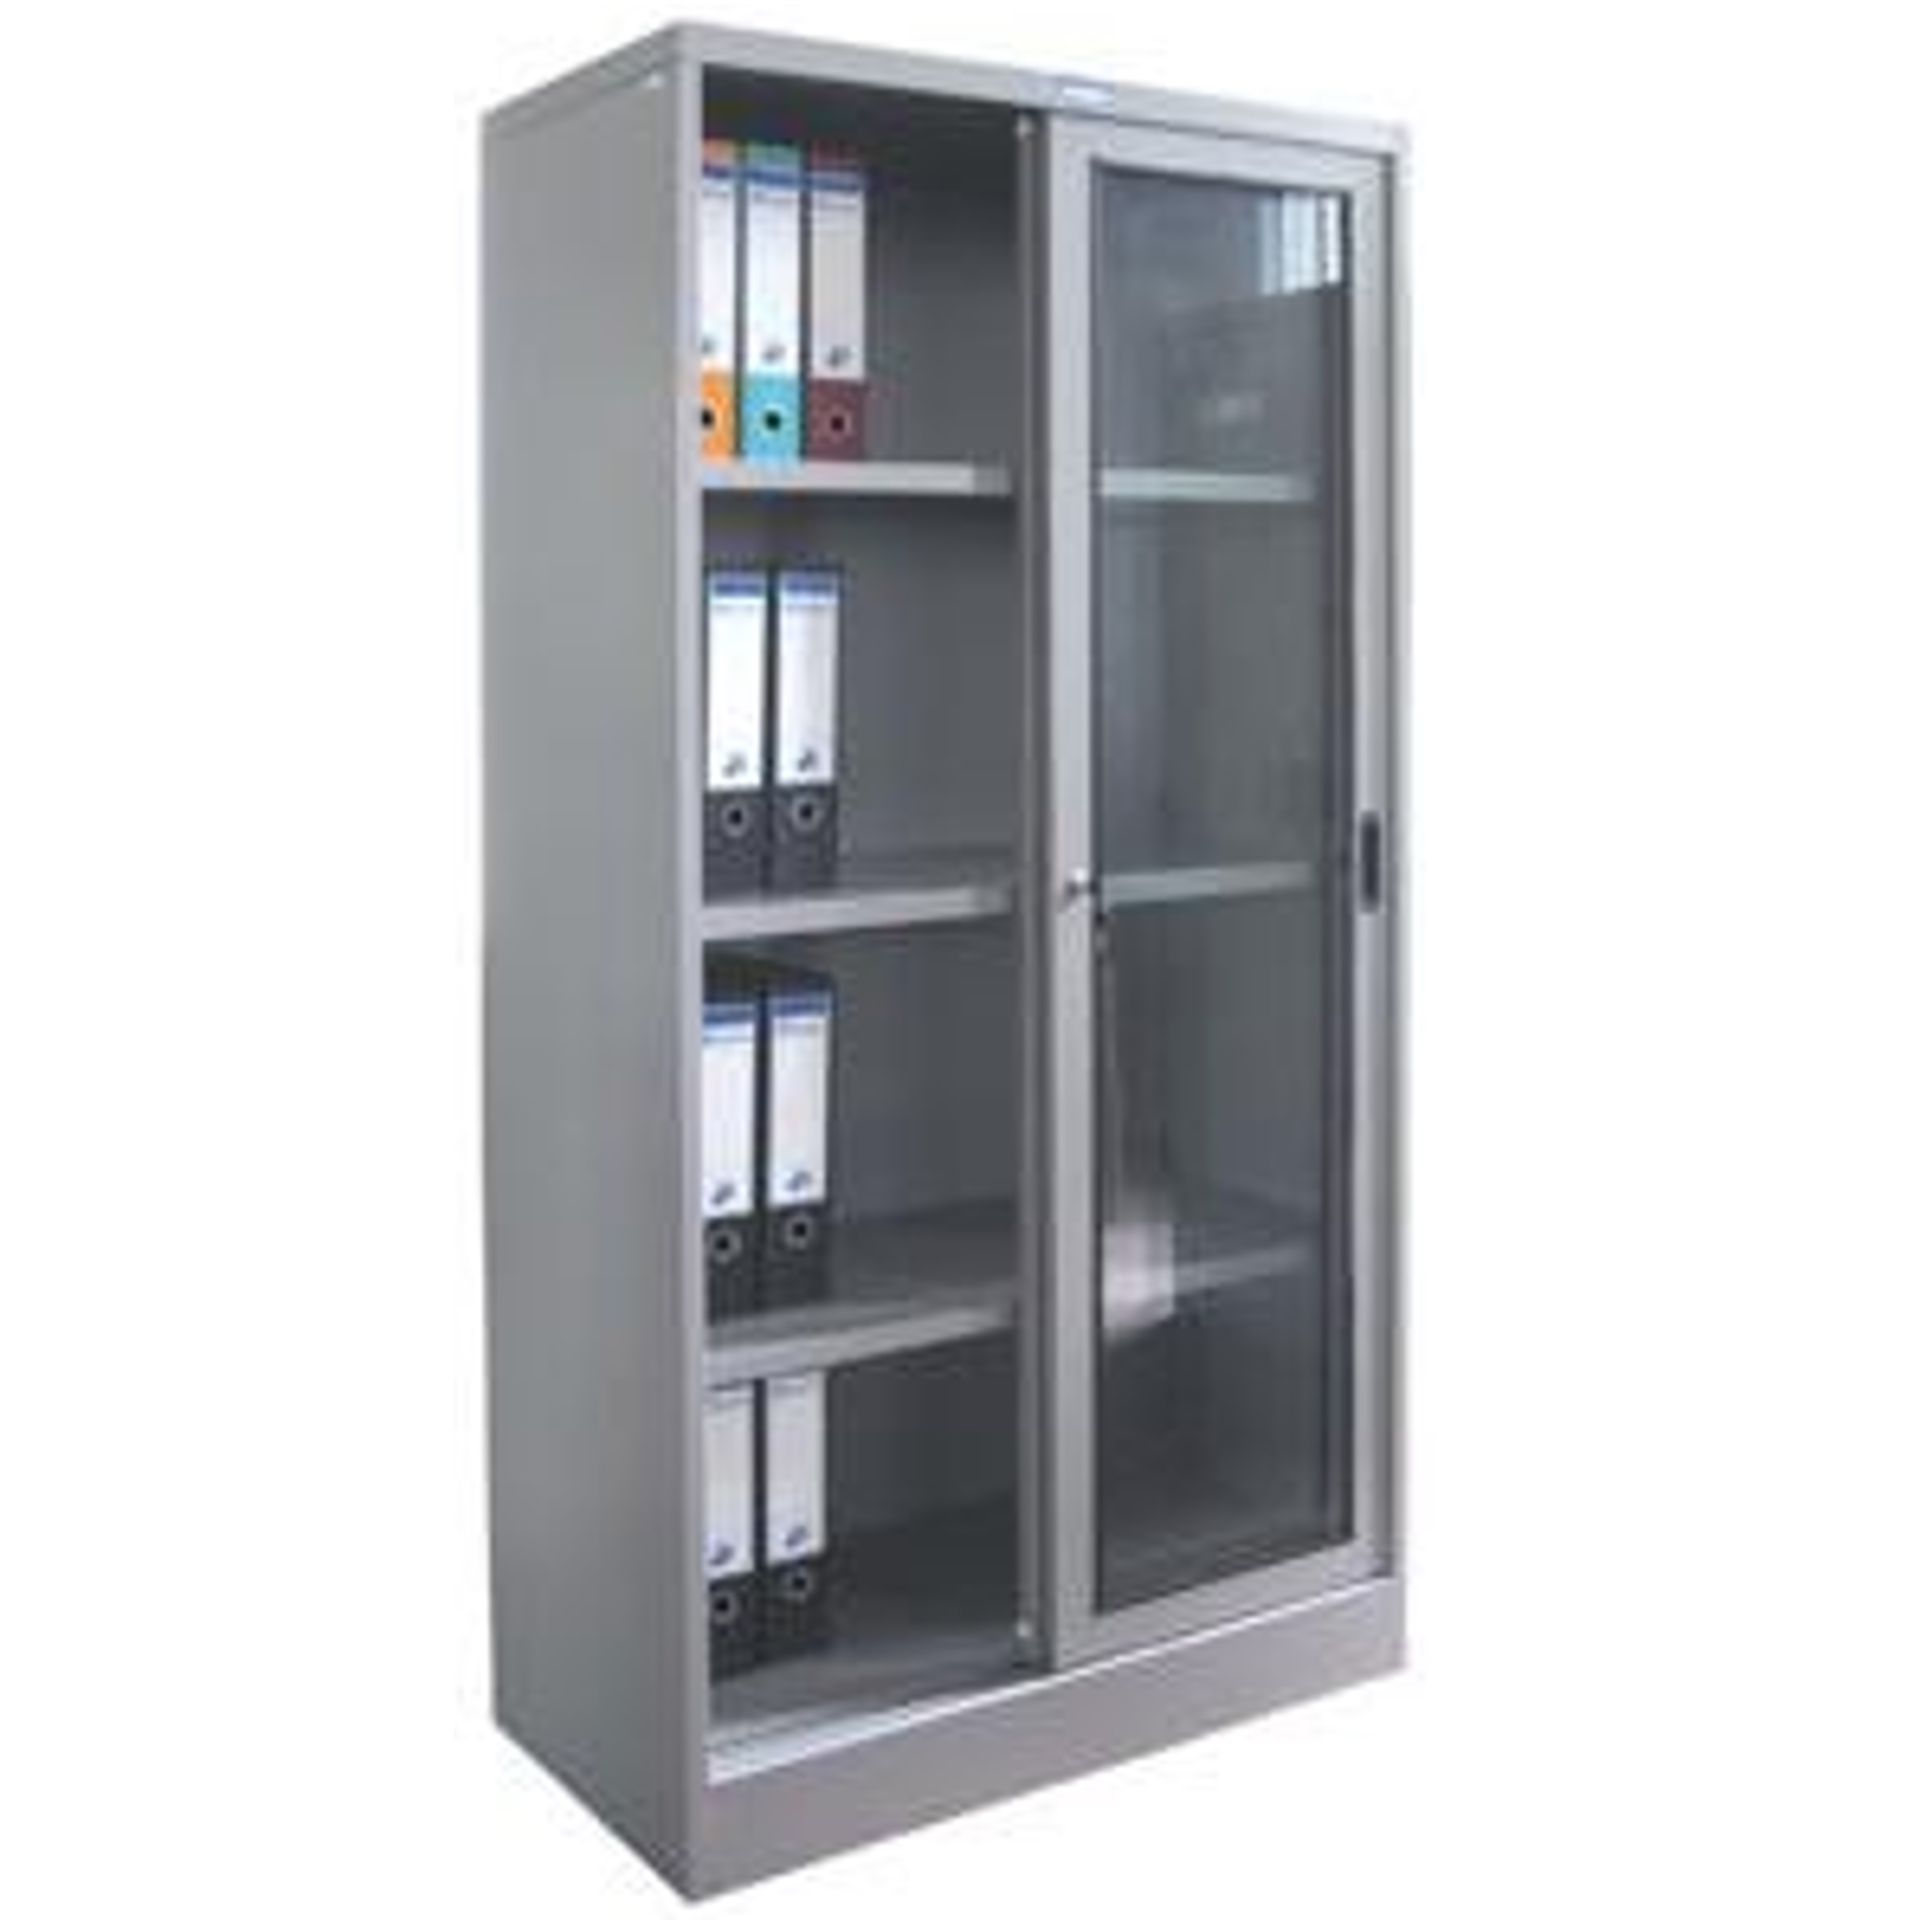 Sliding Glass Door Cabinet Handballtunisie with size 3780 X 3780